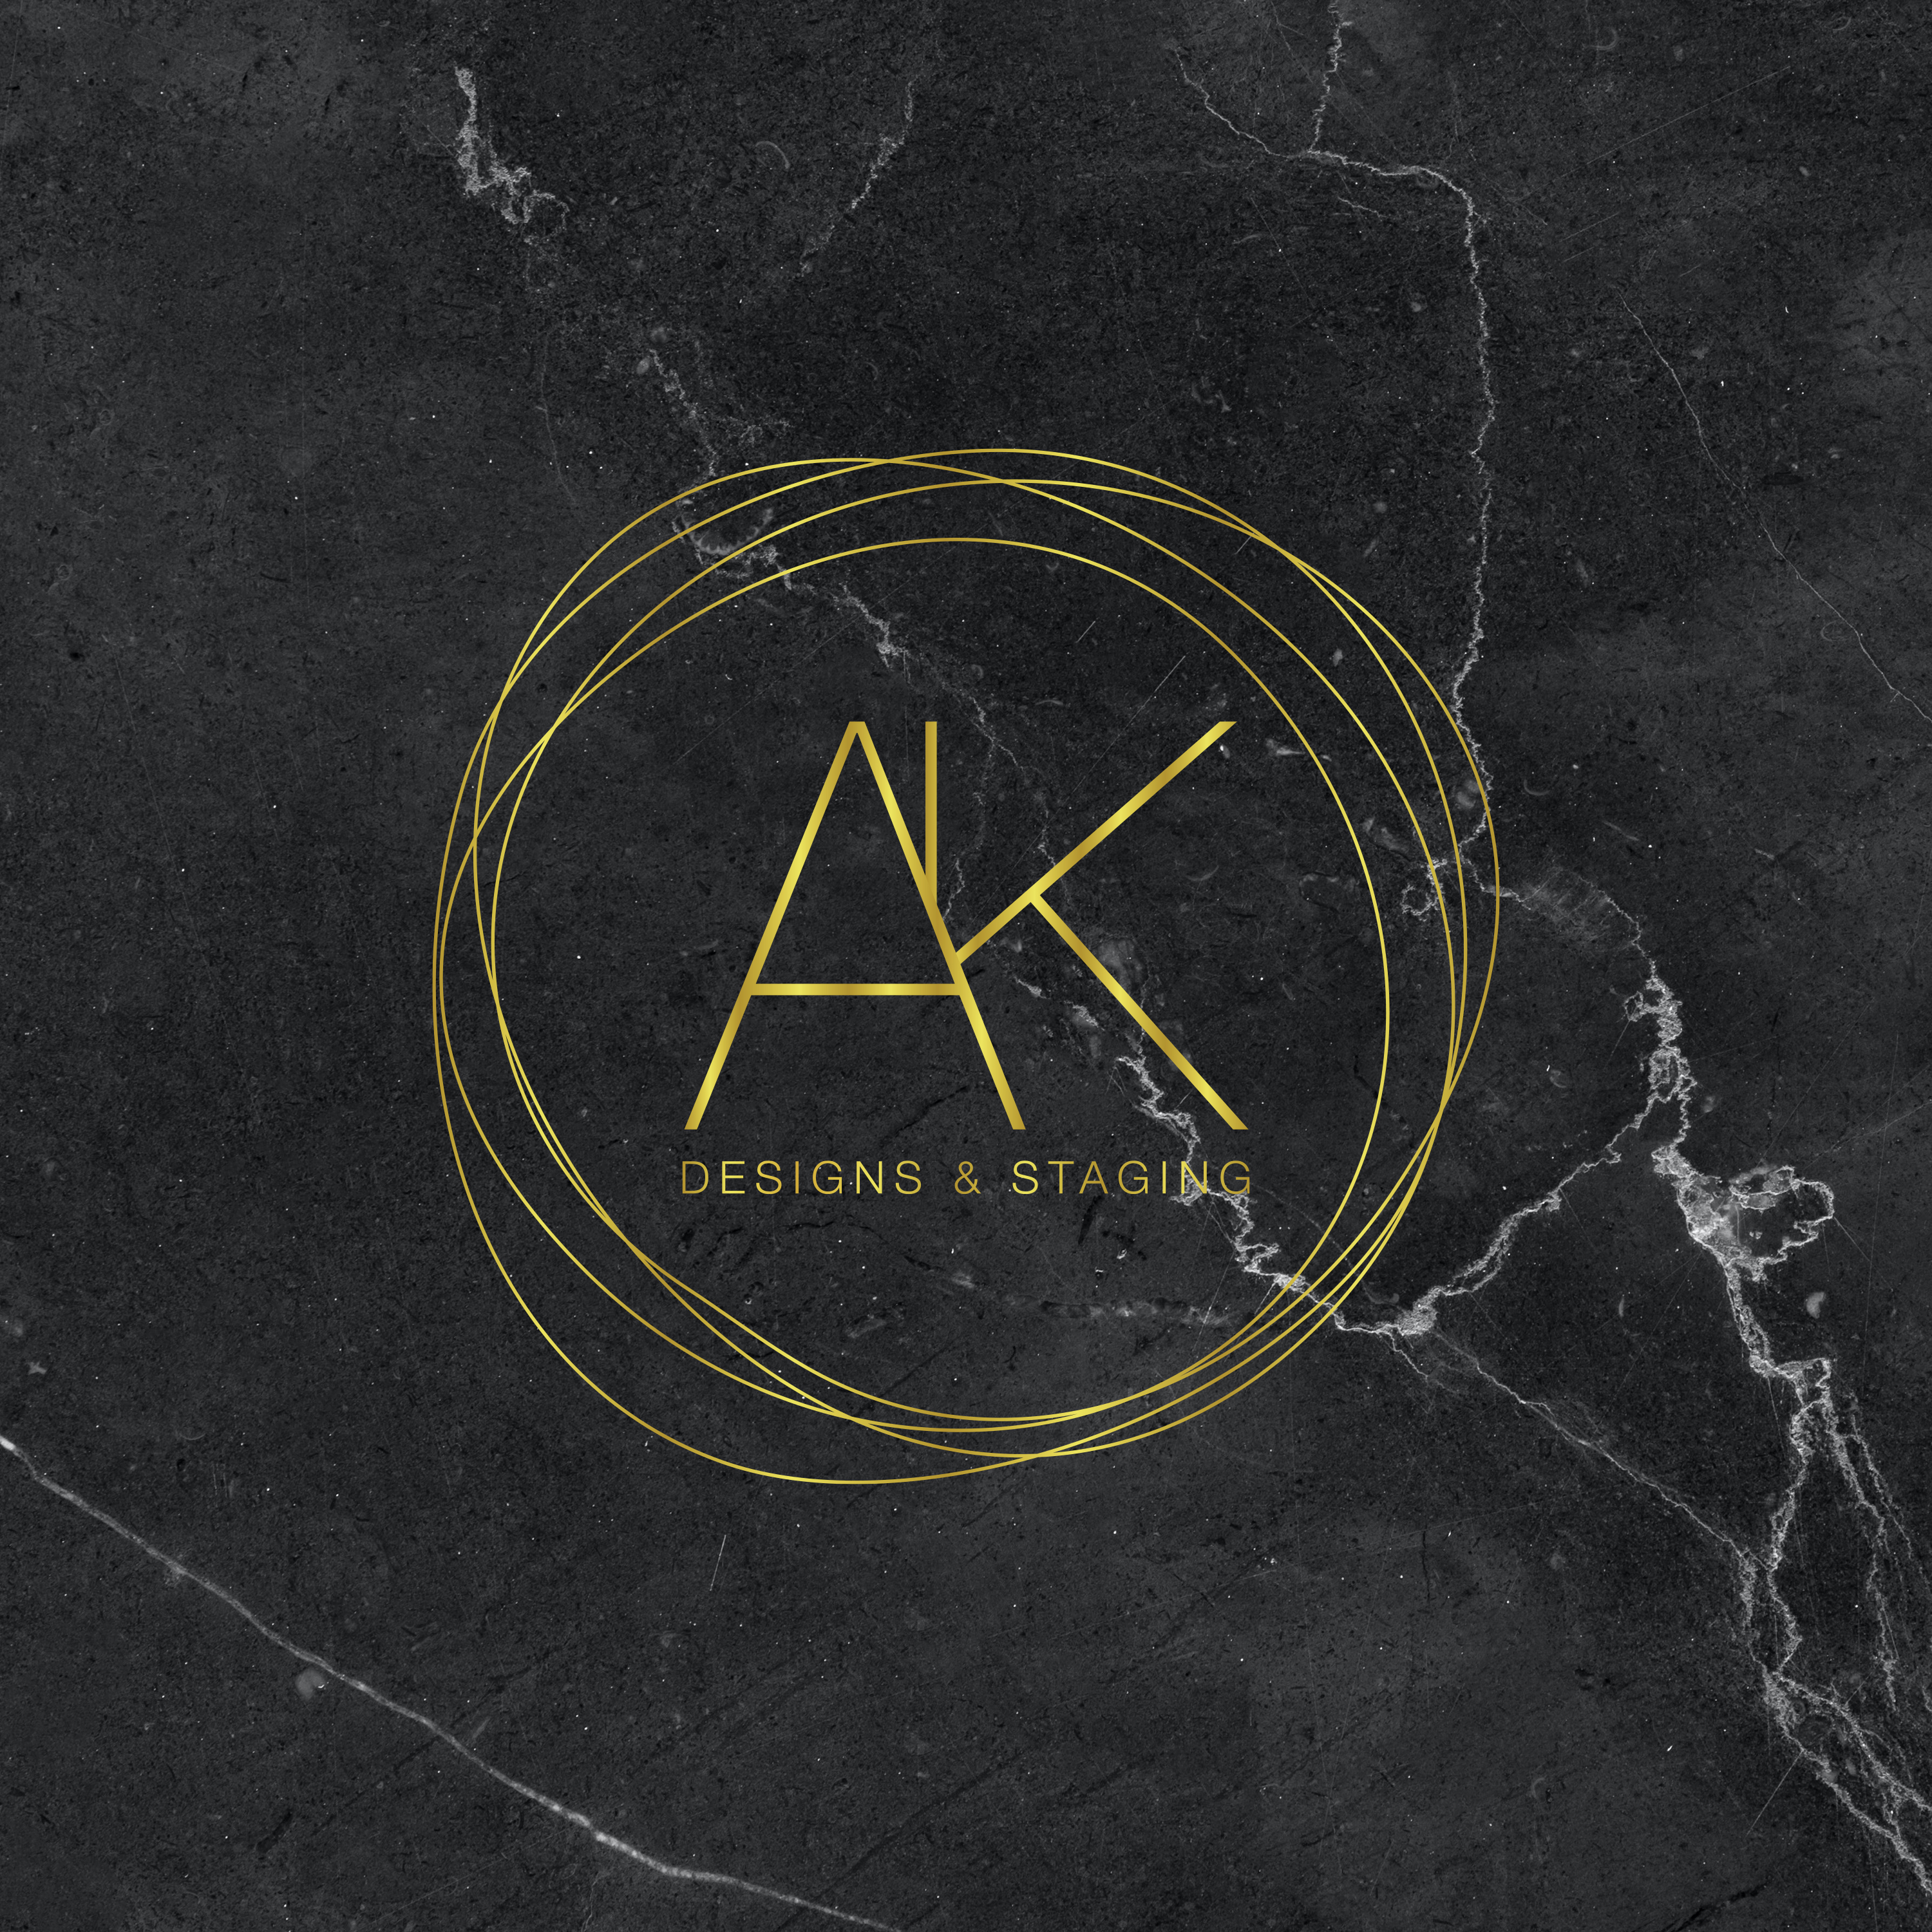 AK Designs & Staging